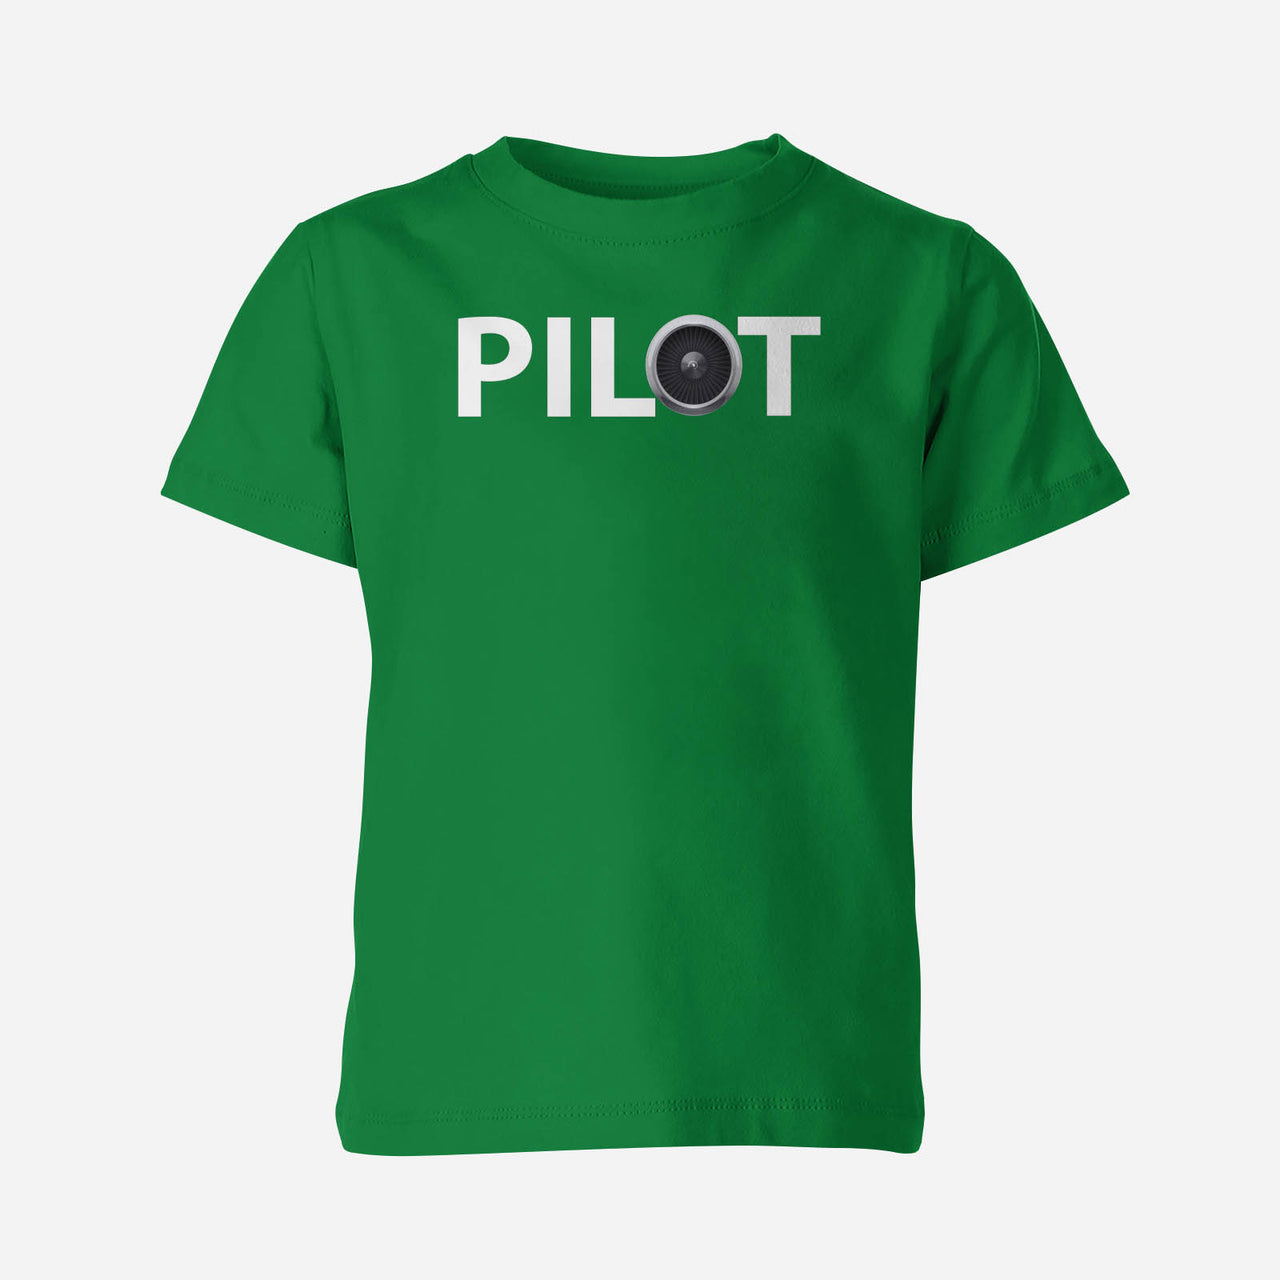 Pilot & Jet Engine Designed Children T-Shirts